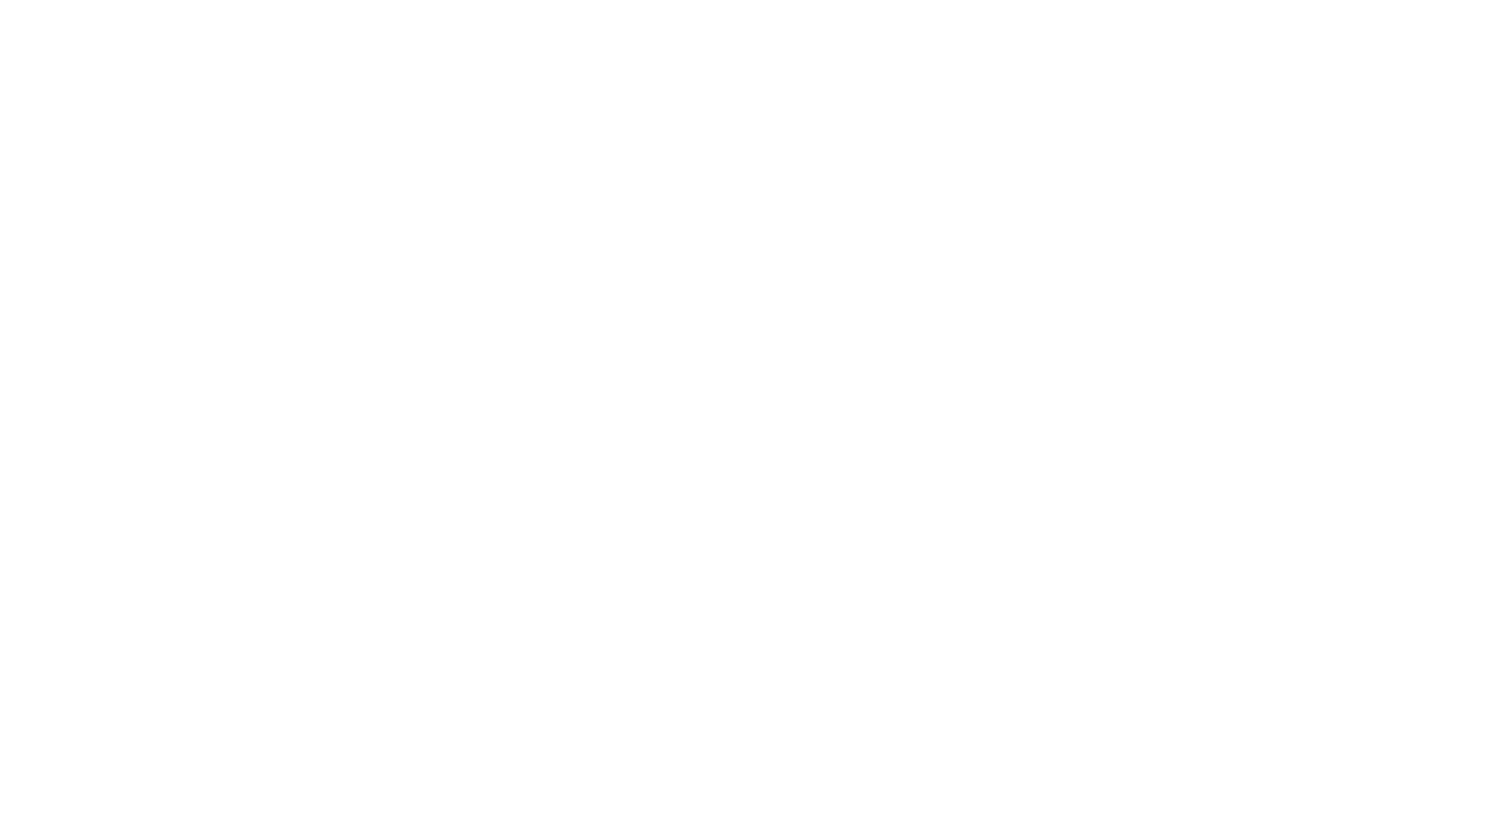 07 Event Group - Elite Indian Wedding DJs and Event Lighting